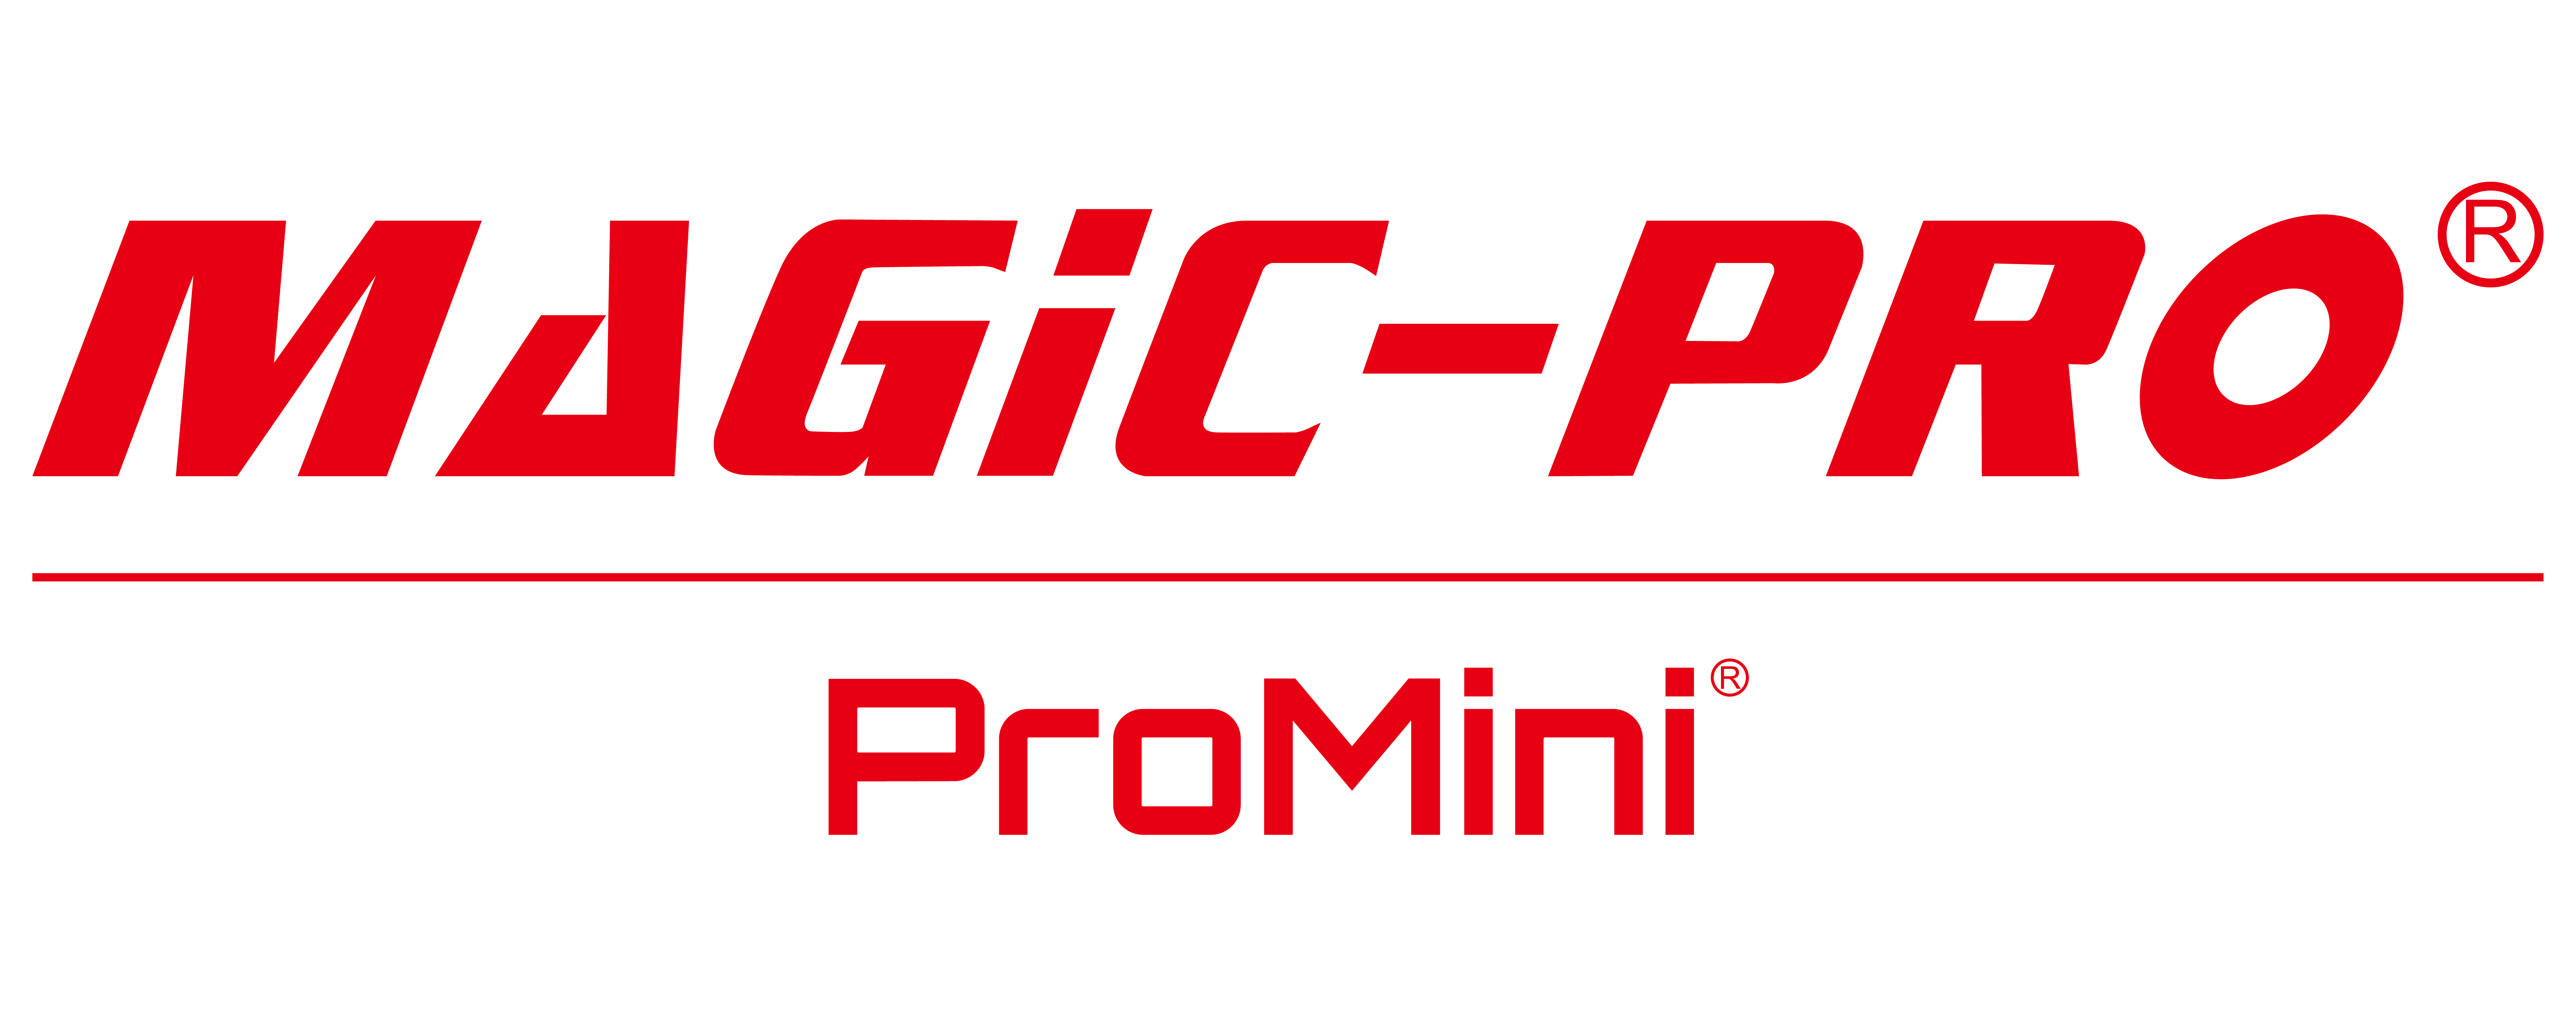 (c) Magic-pro.com